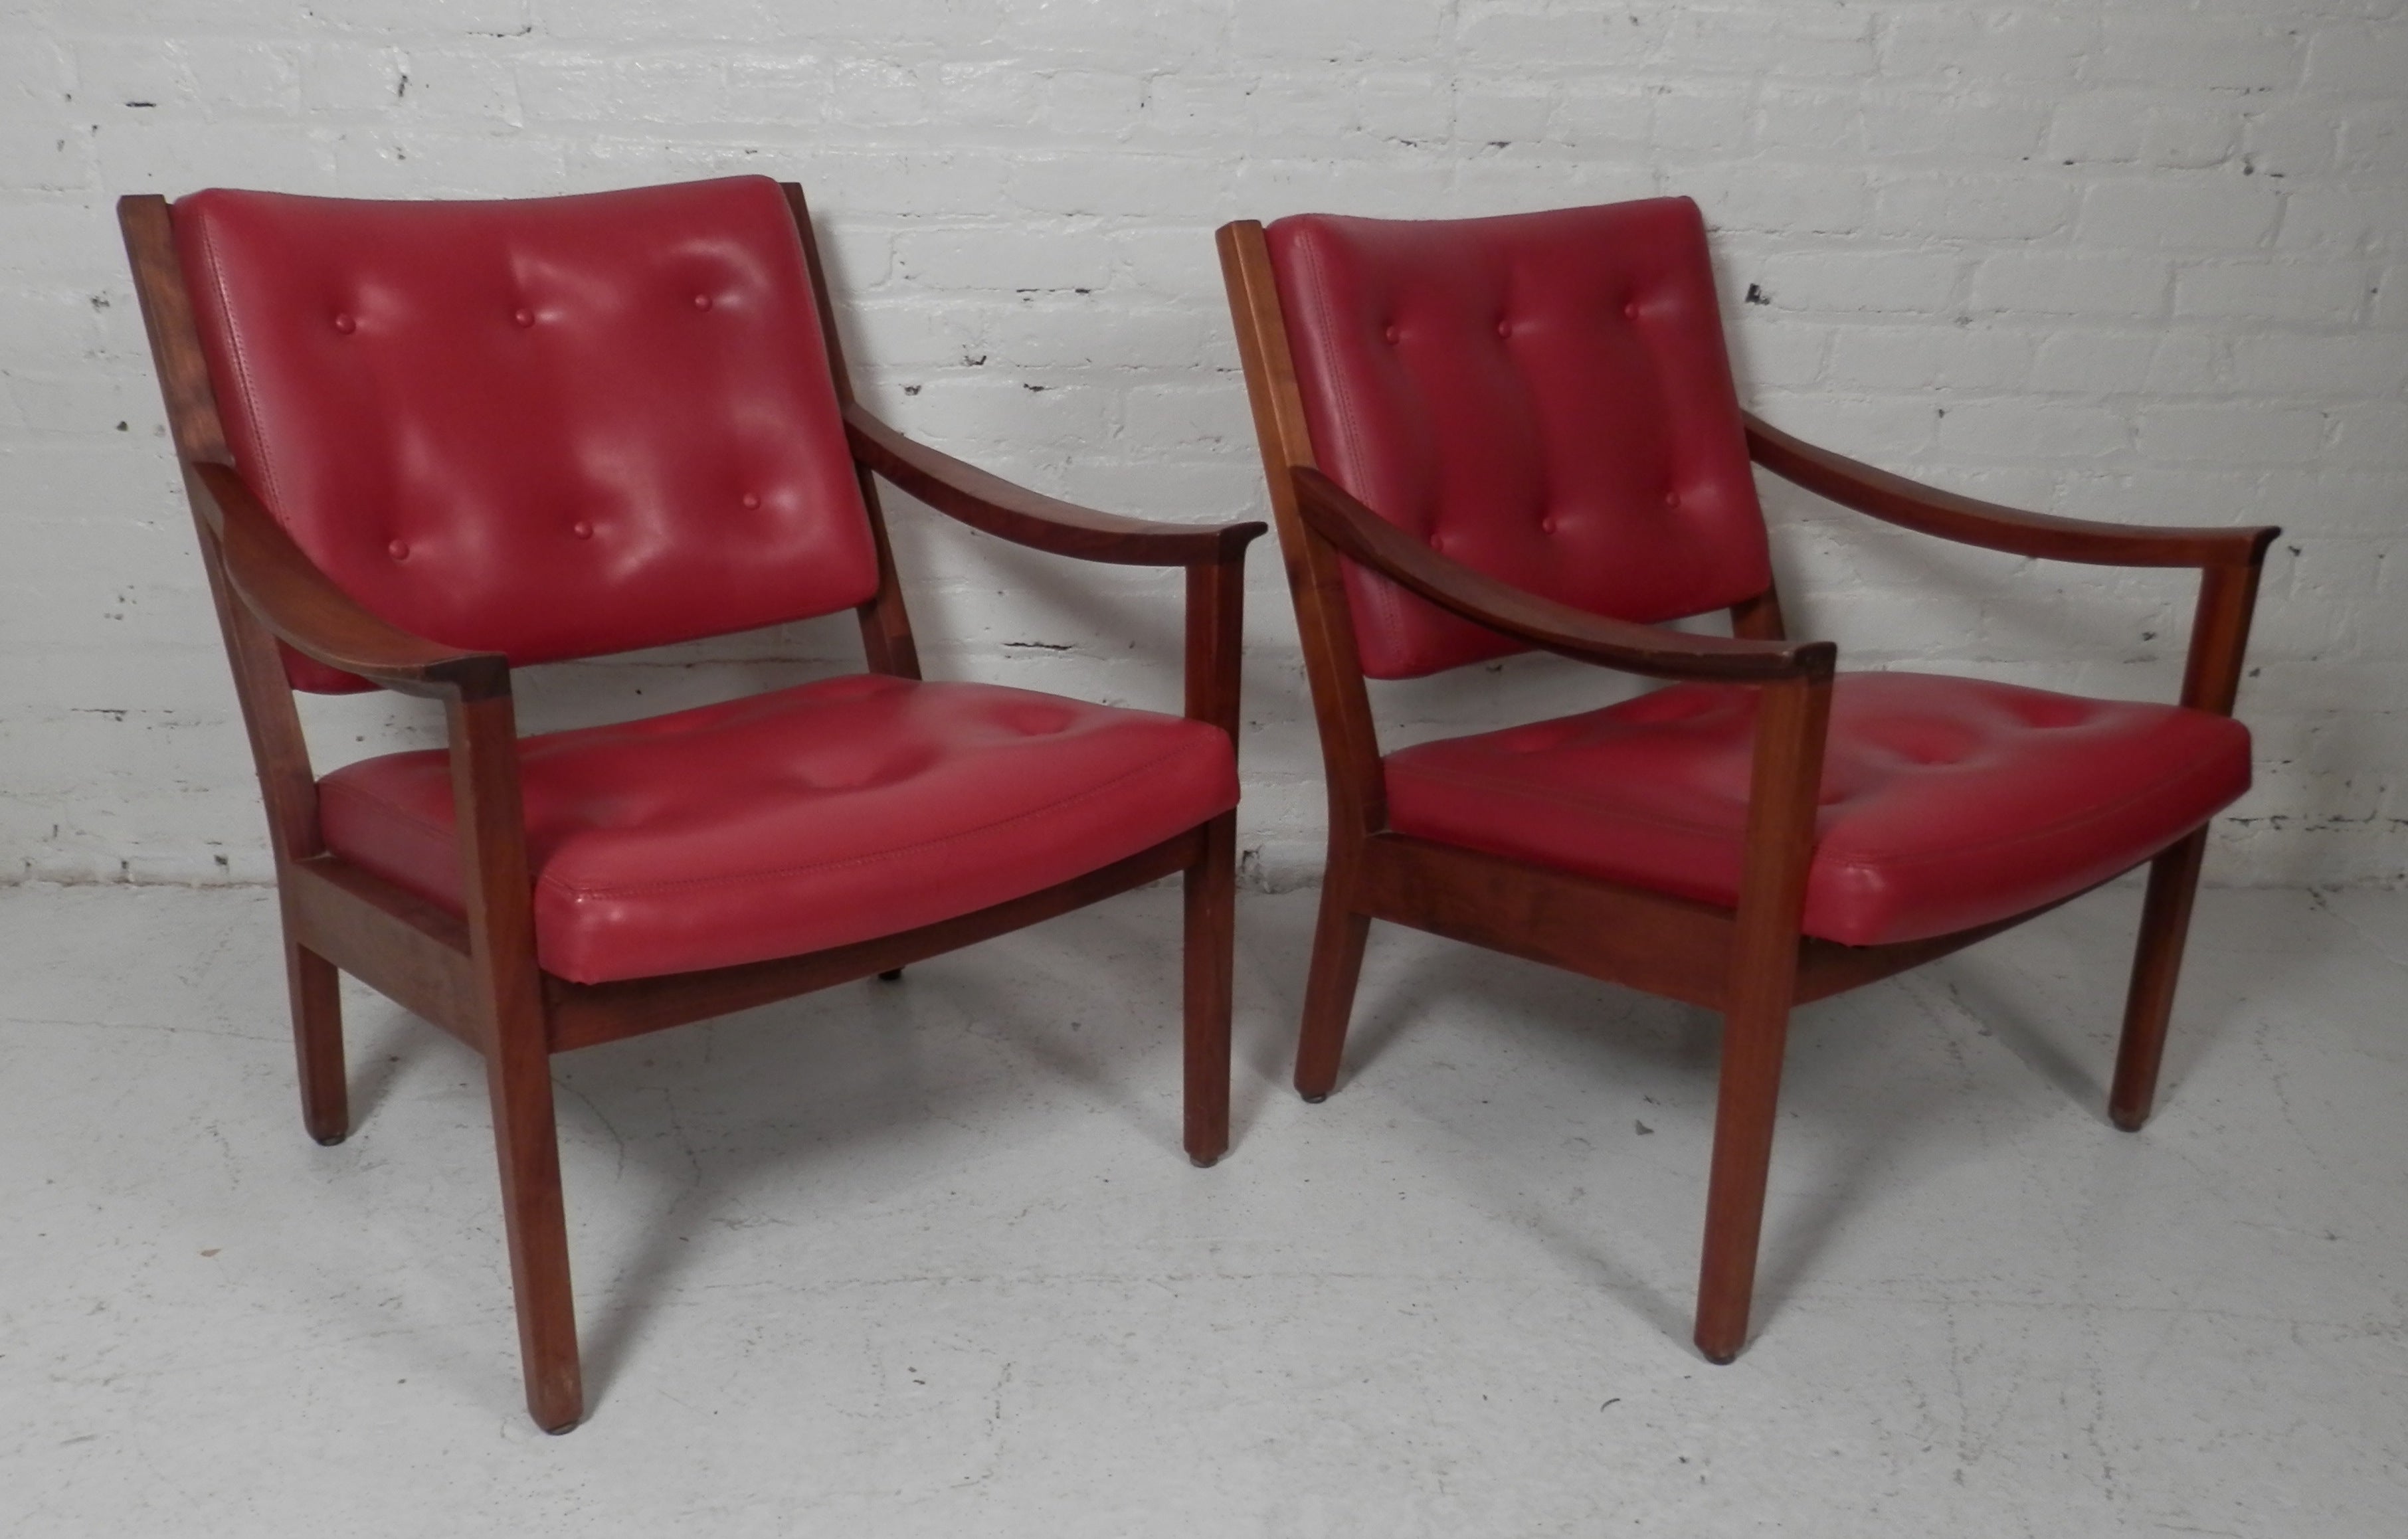 Pair Of Tufted Arm Chairs By W.H. Gunlocke